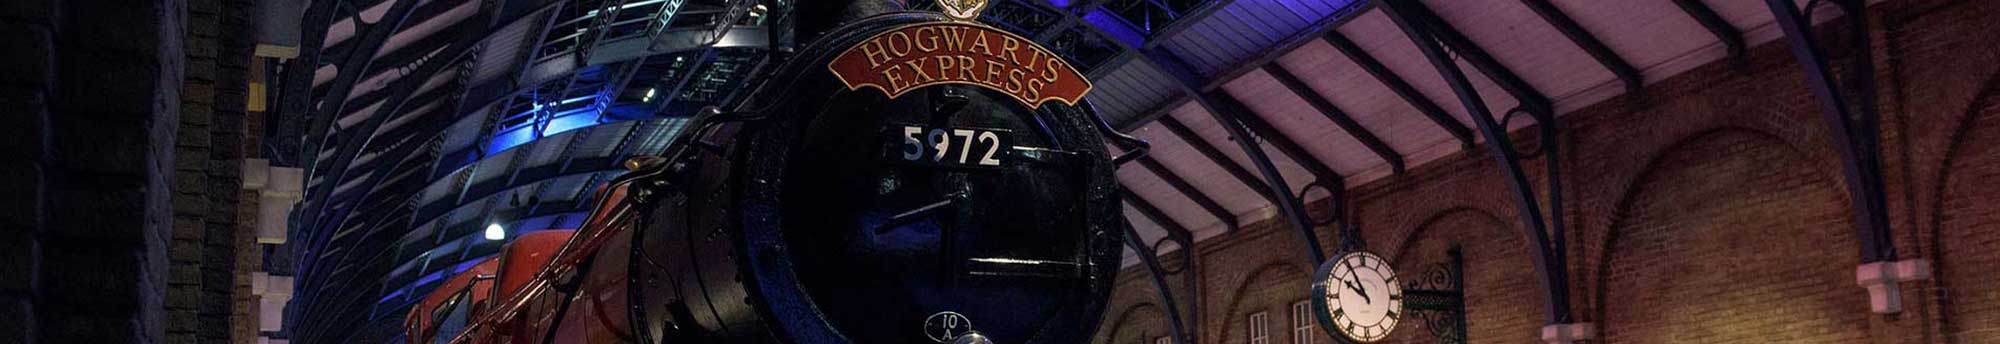 Biglietti Tour Harry Potter negli Studi Warner